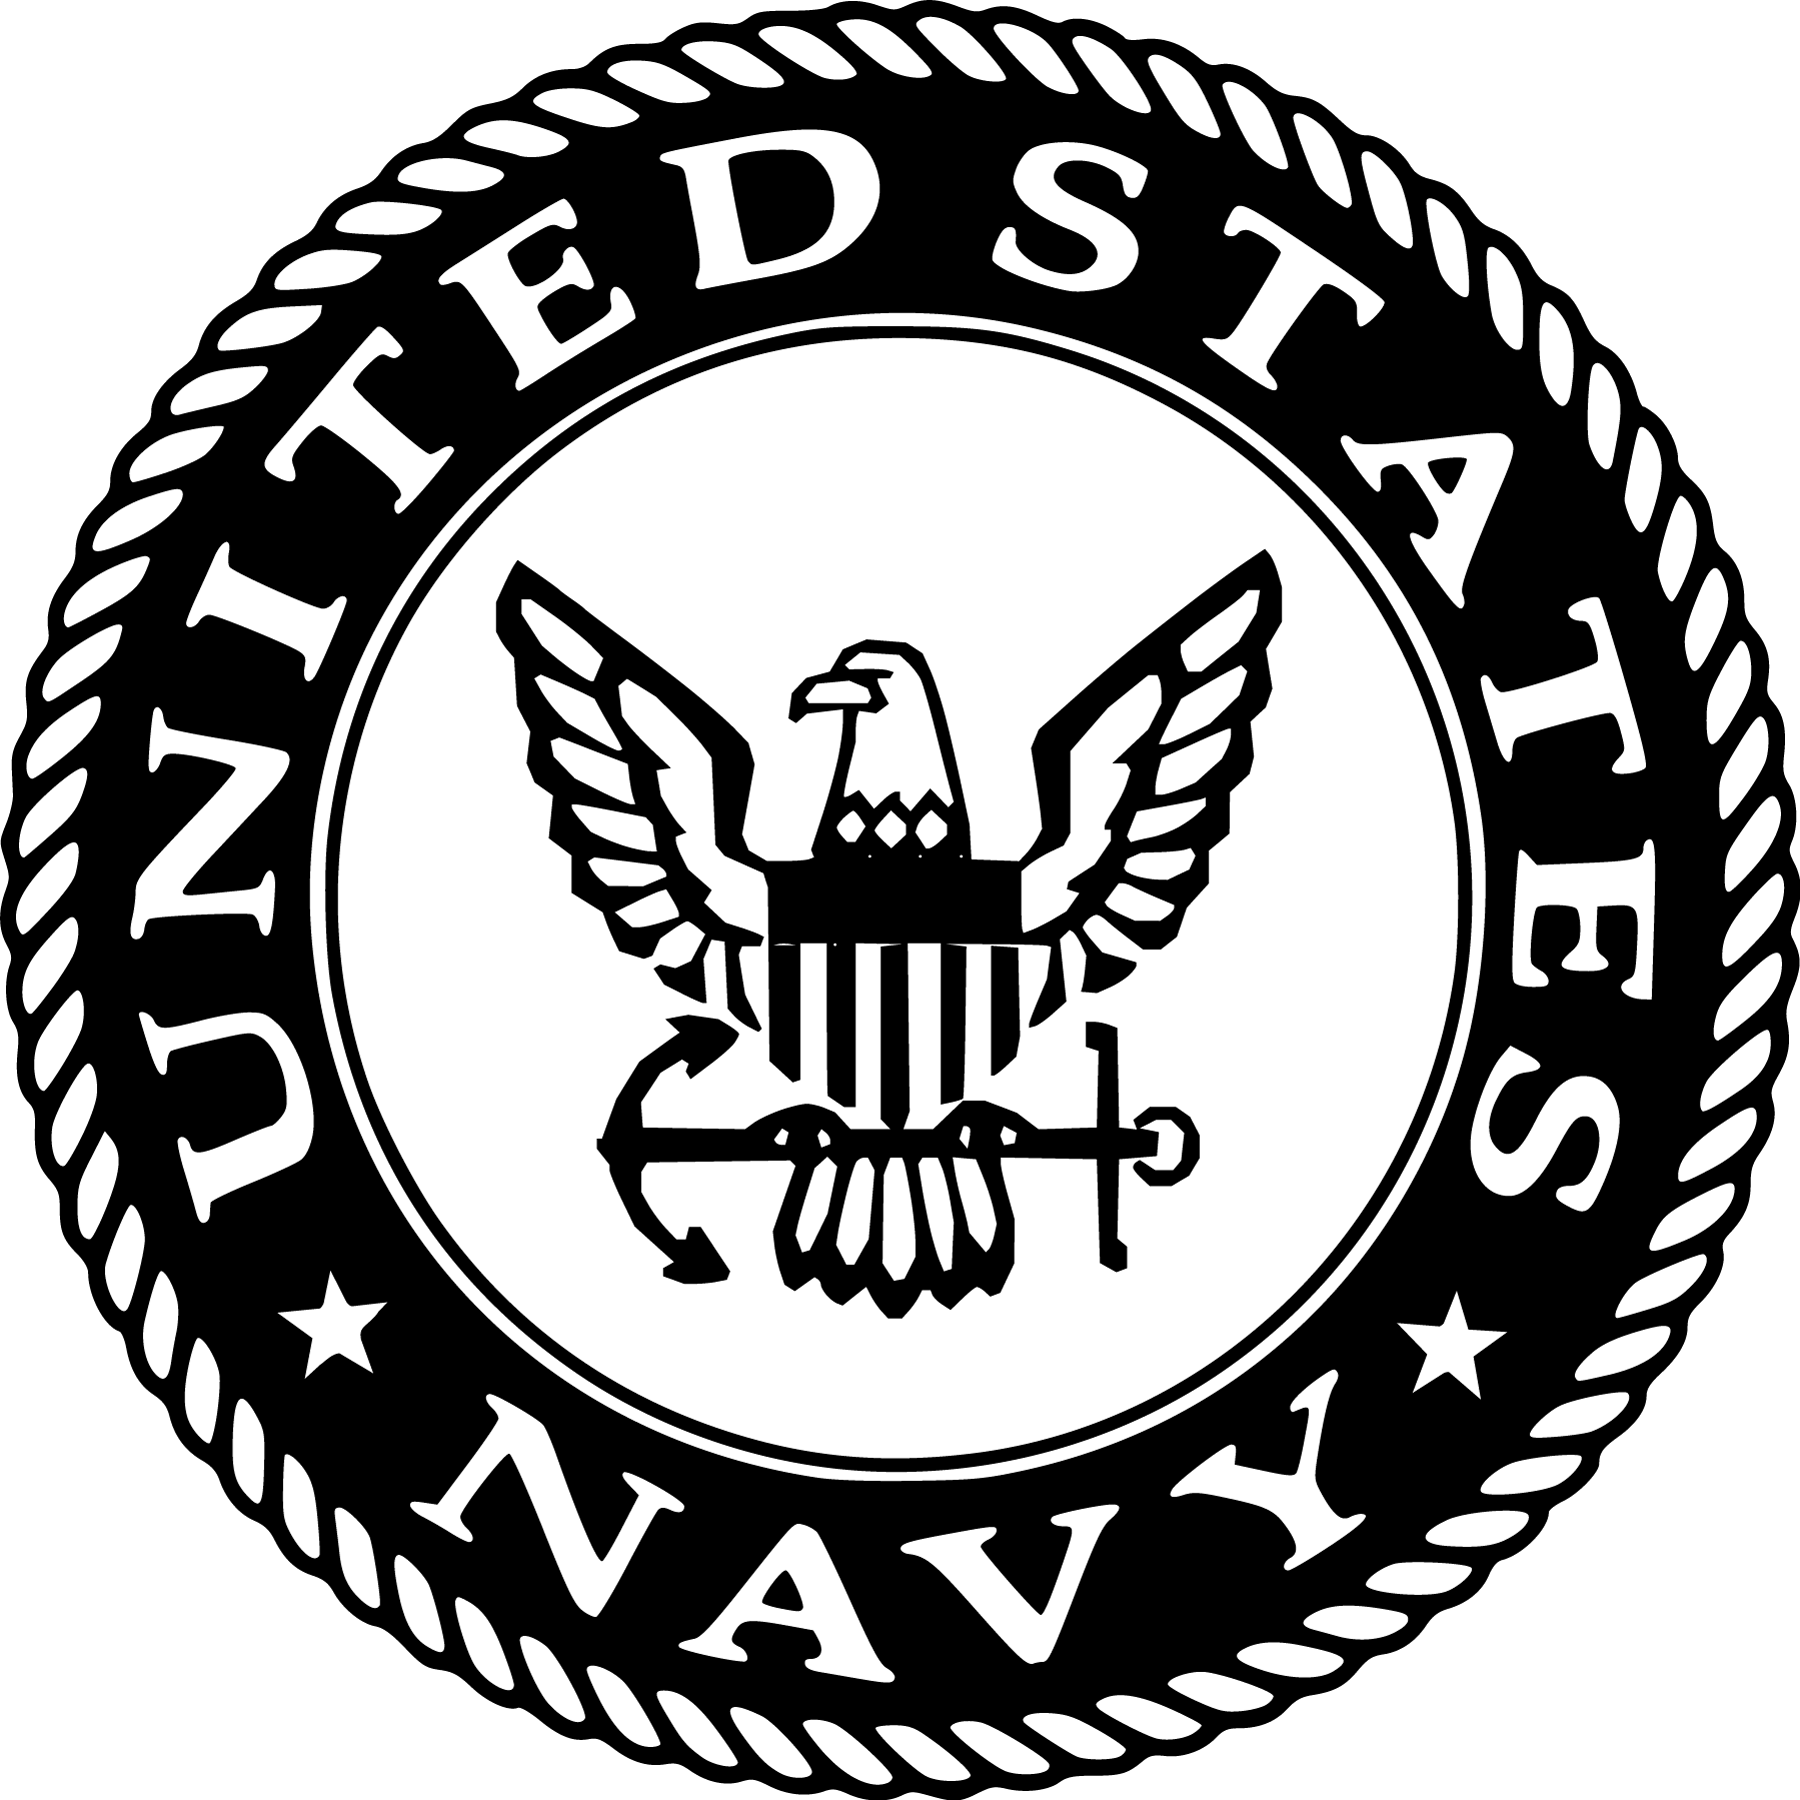 Military Logos Vector - Army, Navy, Air Force, Marines